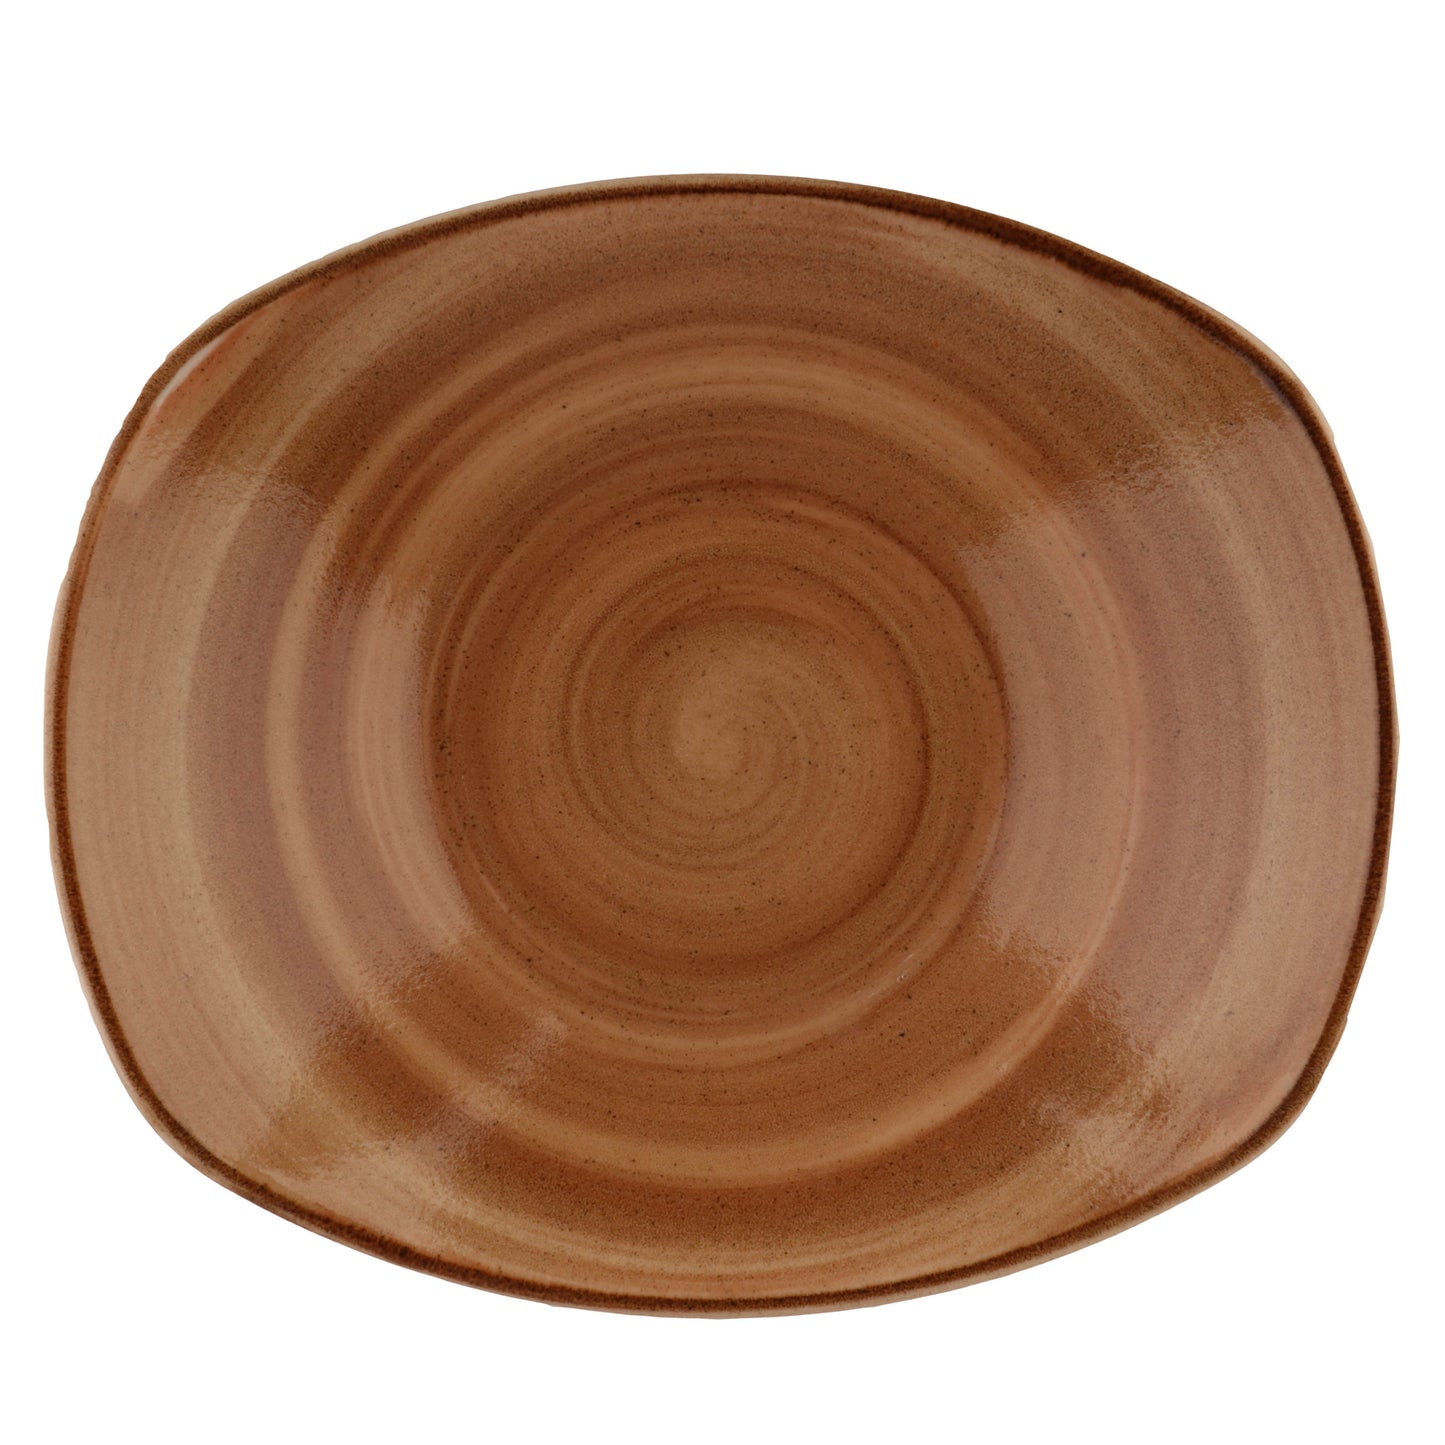 34.3 oz. Brown Porcelain Pasta Bowl, 10 5/8" x 9 3/4", Corona Artisan Brown (Stocked) (12 Pack)